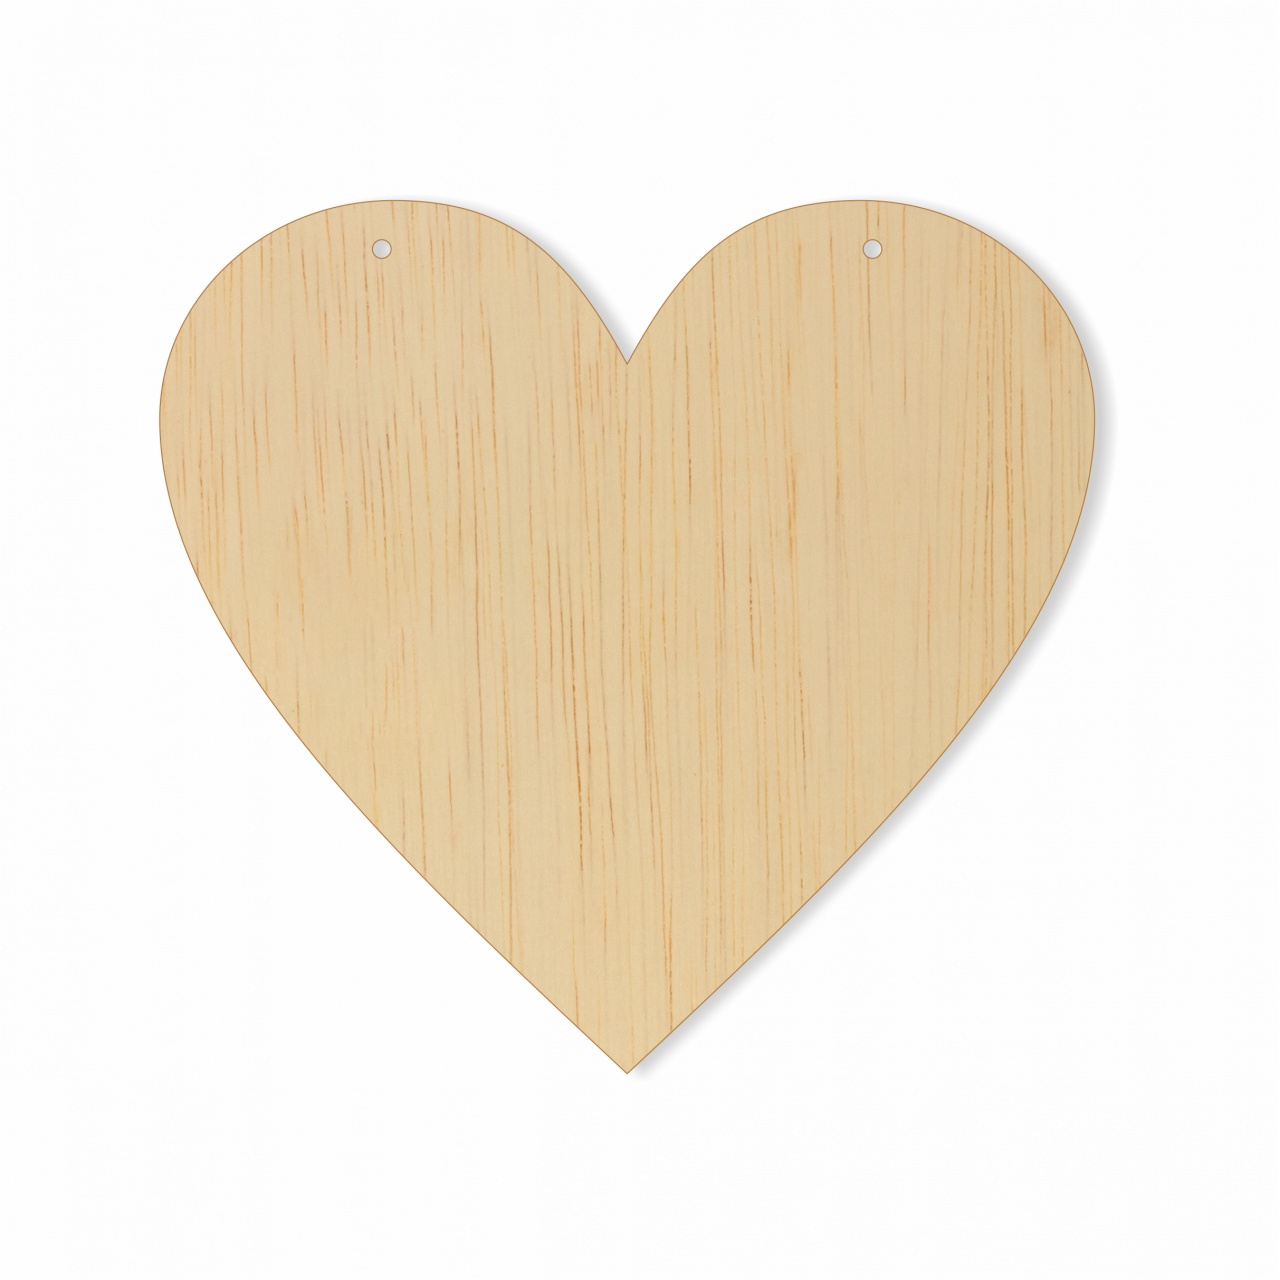 Inimă, 15×14 cm, placaj :: 15×14 cm